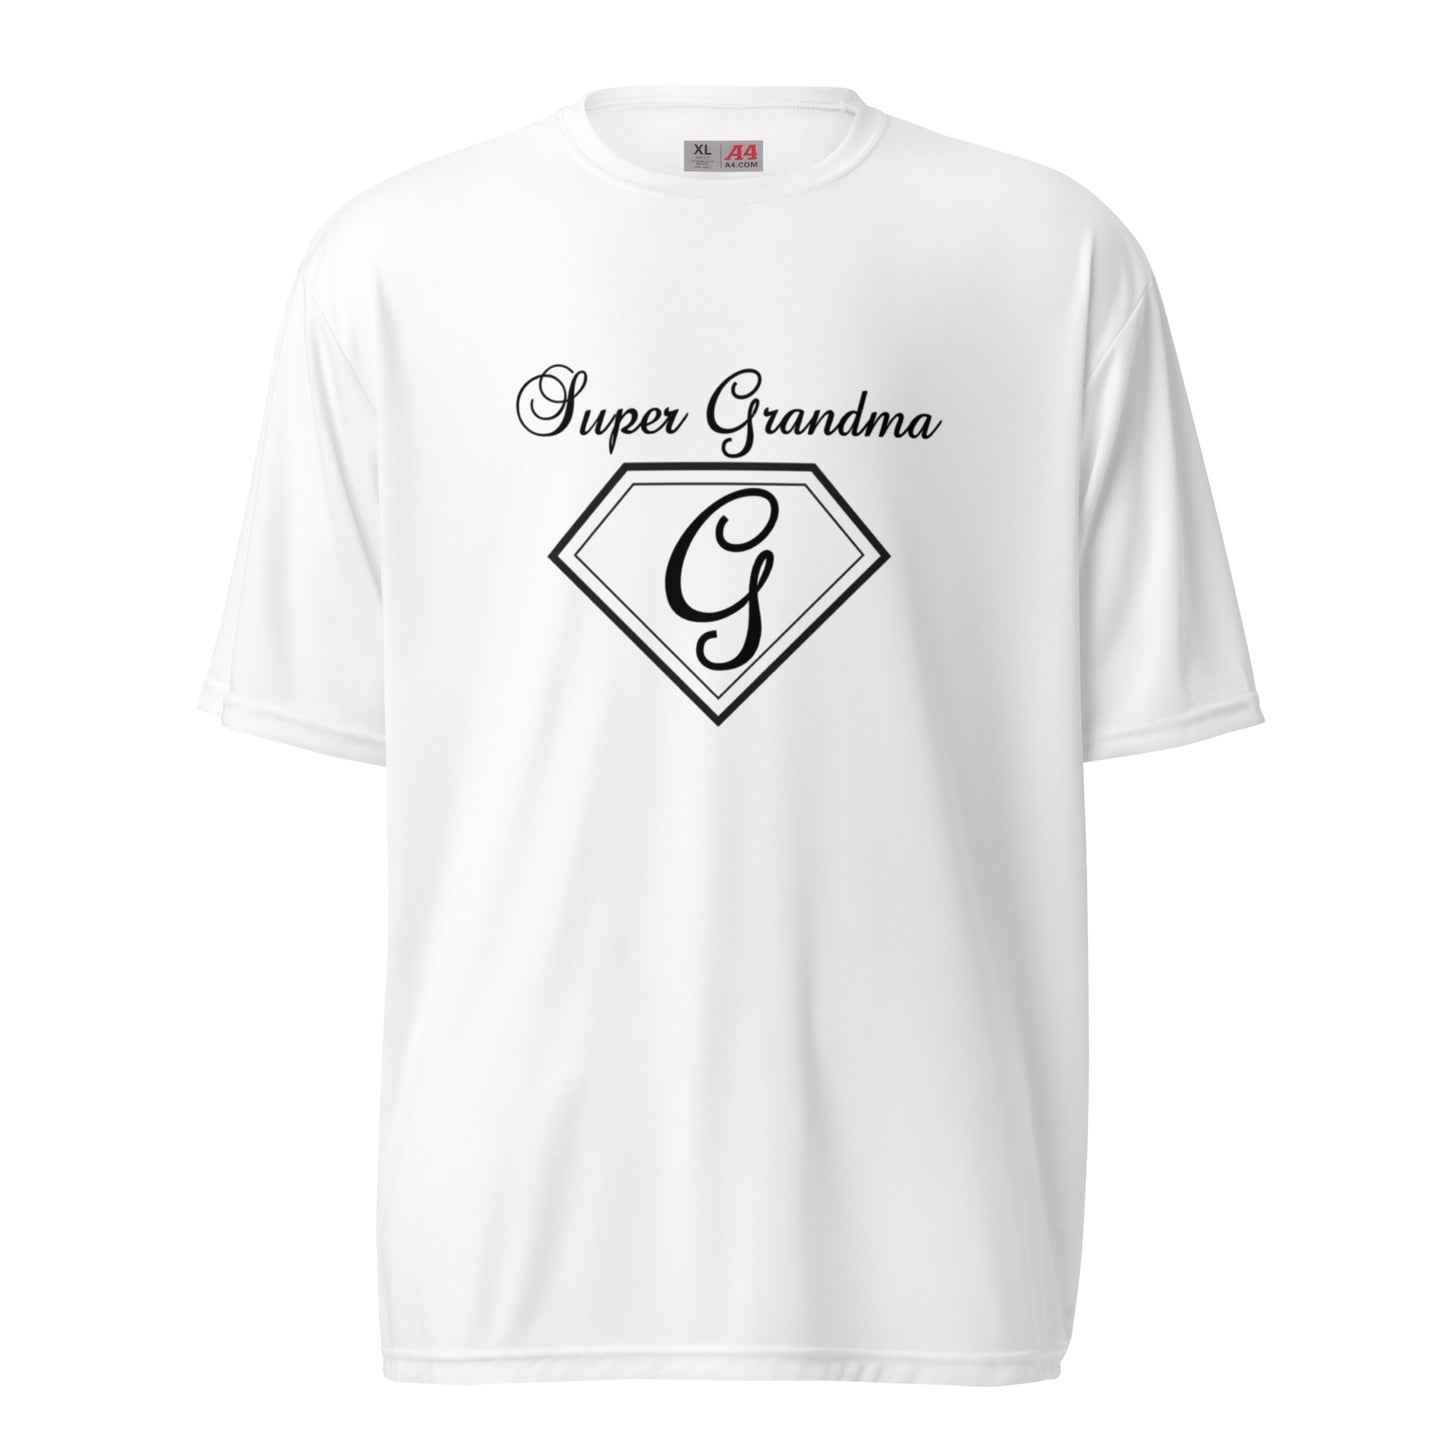 Super Grandma unisex performance crew neck t-shirt - Black Print